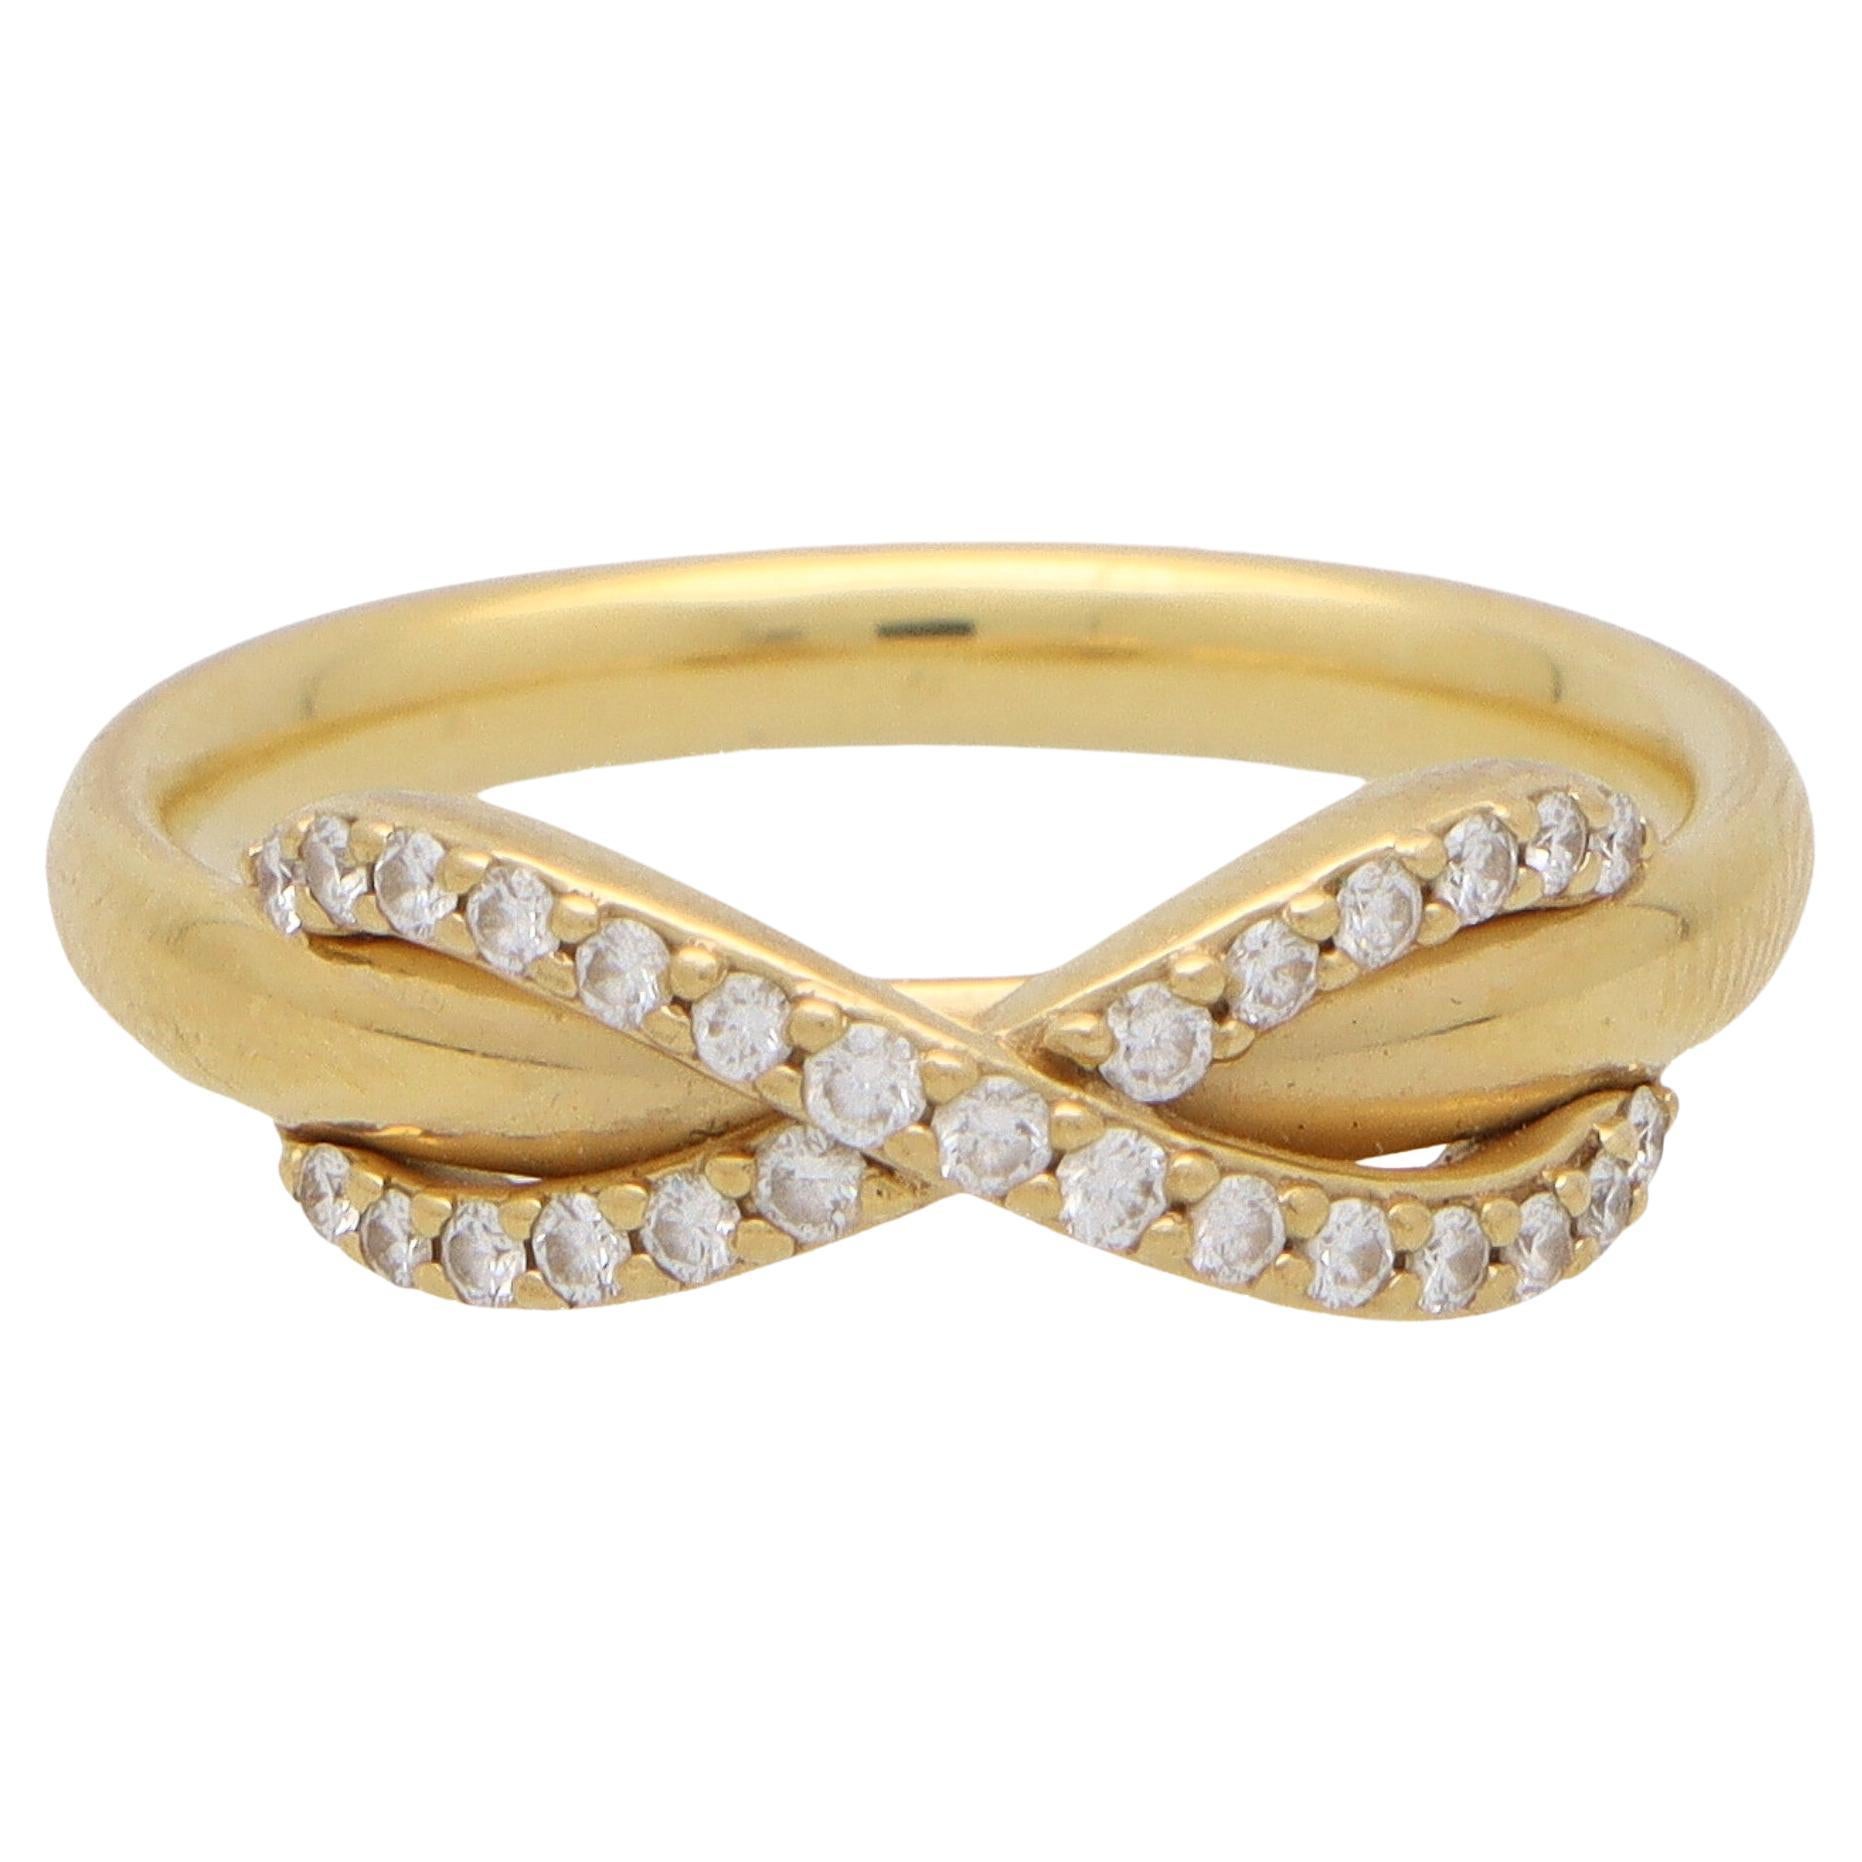 Vintage Tiffany & Co. Infinity Diamond Ring Set in 18k Yellow Gold